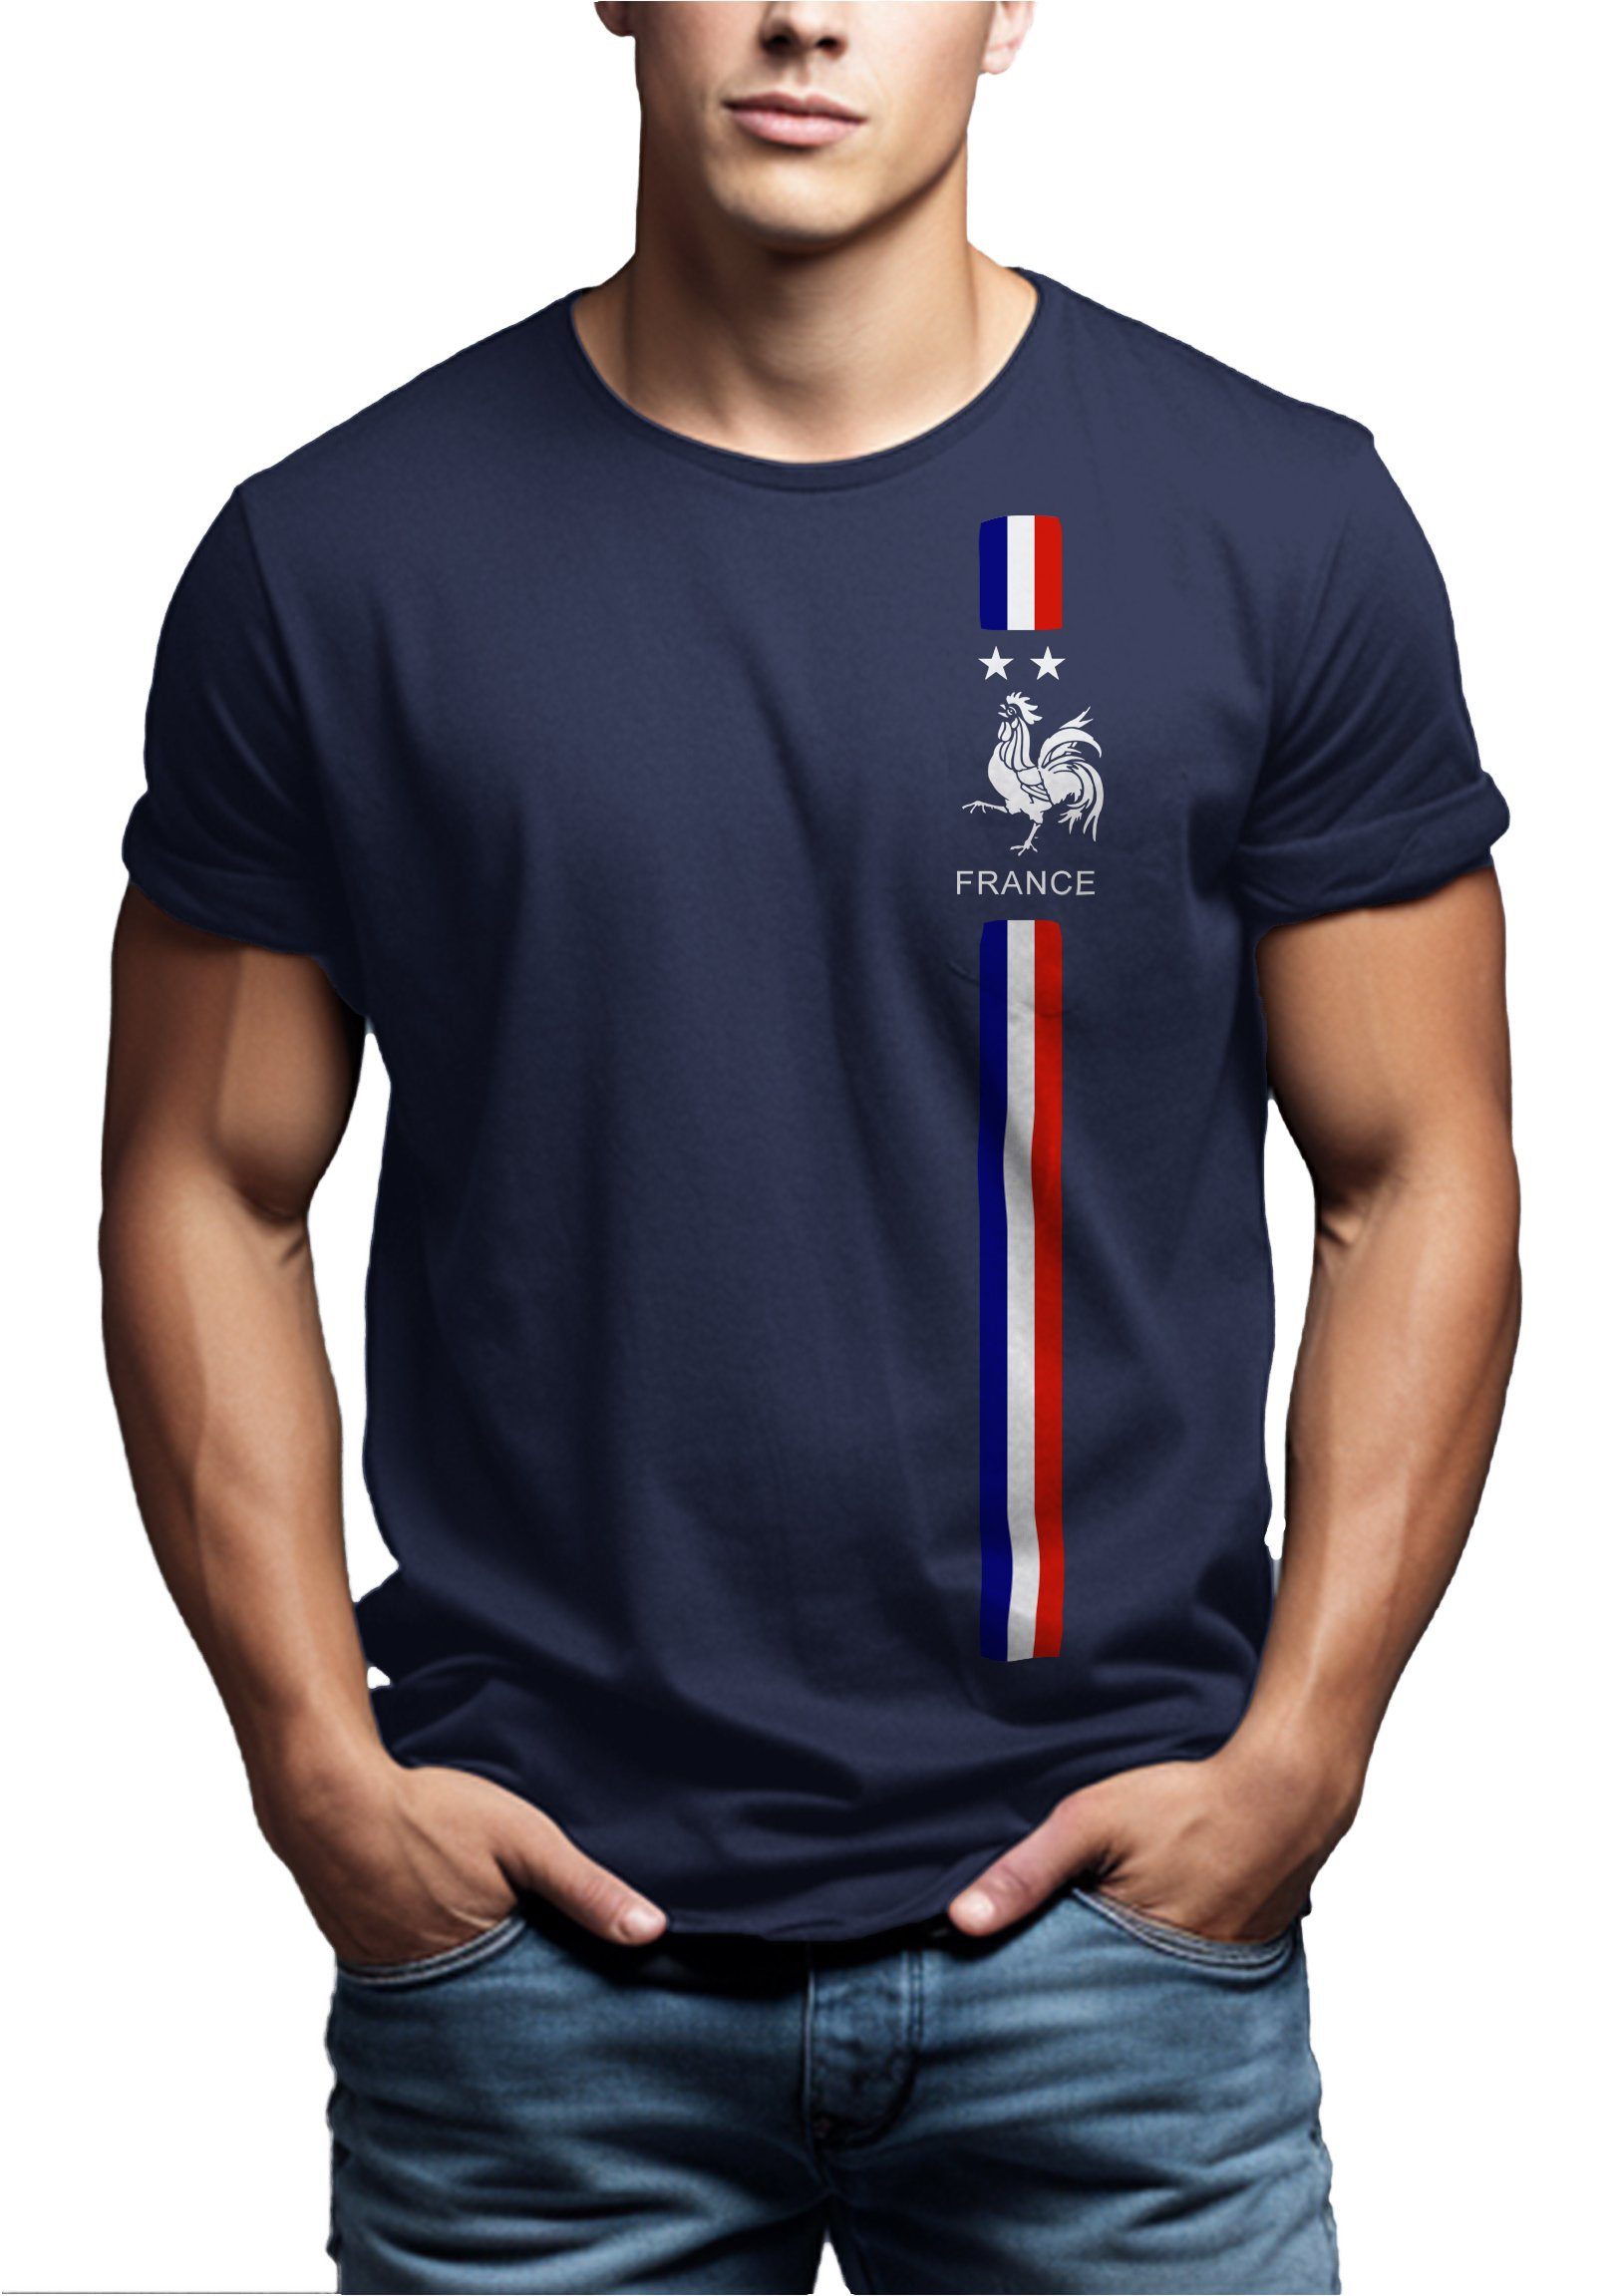 MAKAYA Print-Shirt Herren Fußball Trikot Geschenke Fahne Frankreich Flagge Blau Männer